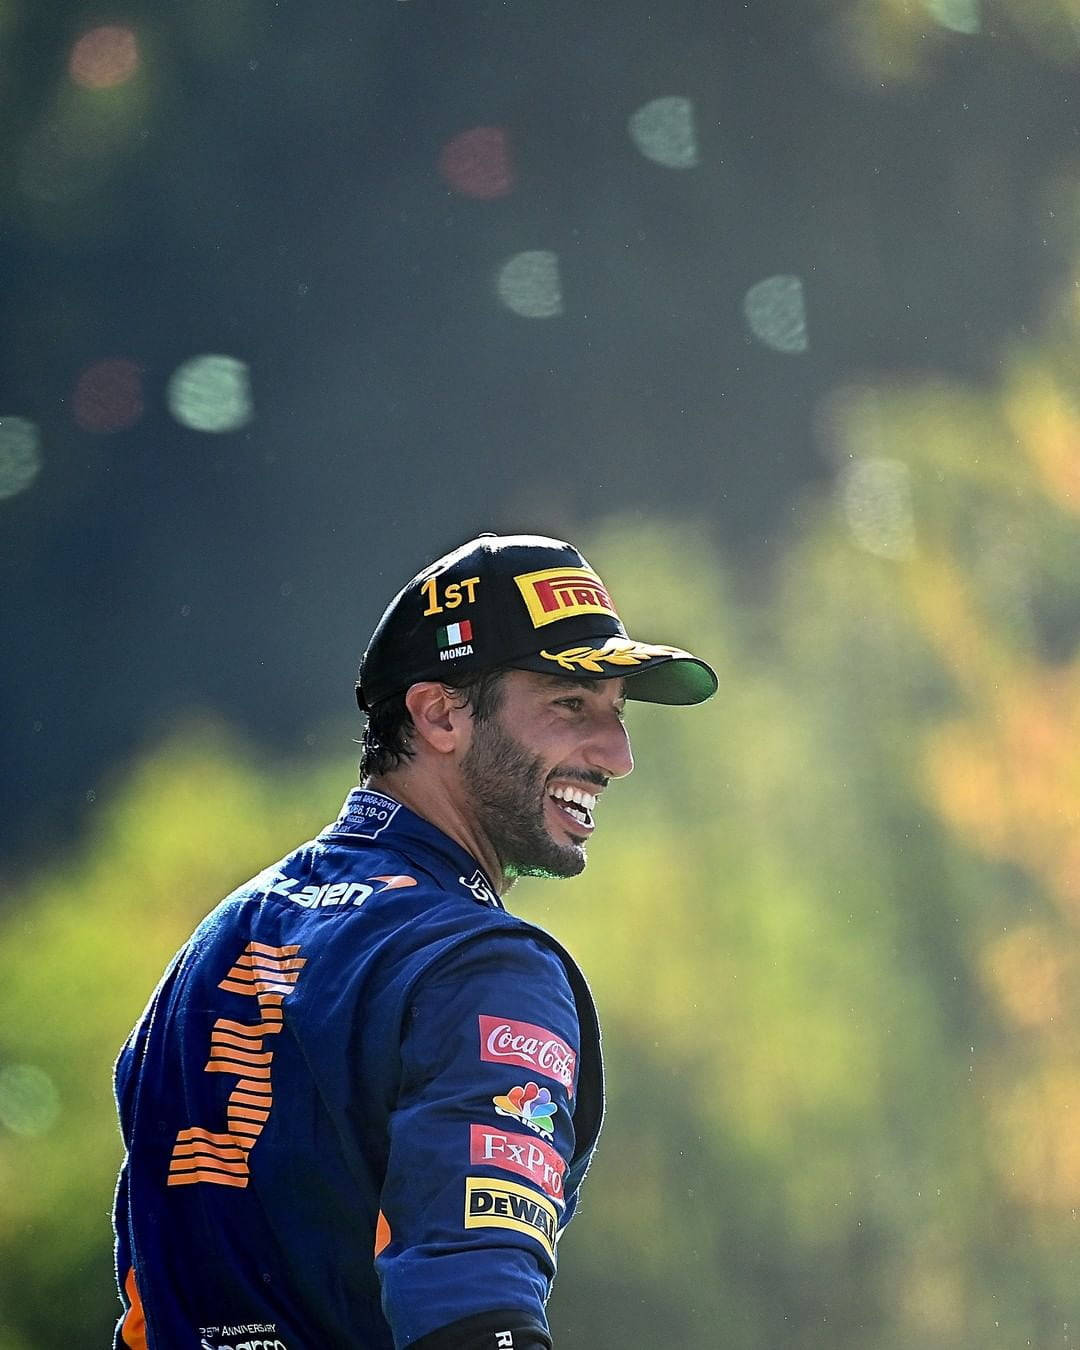 Daniel Ricciardo Gazes Off to the Side on the Race Track Wallpaper